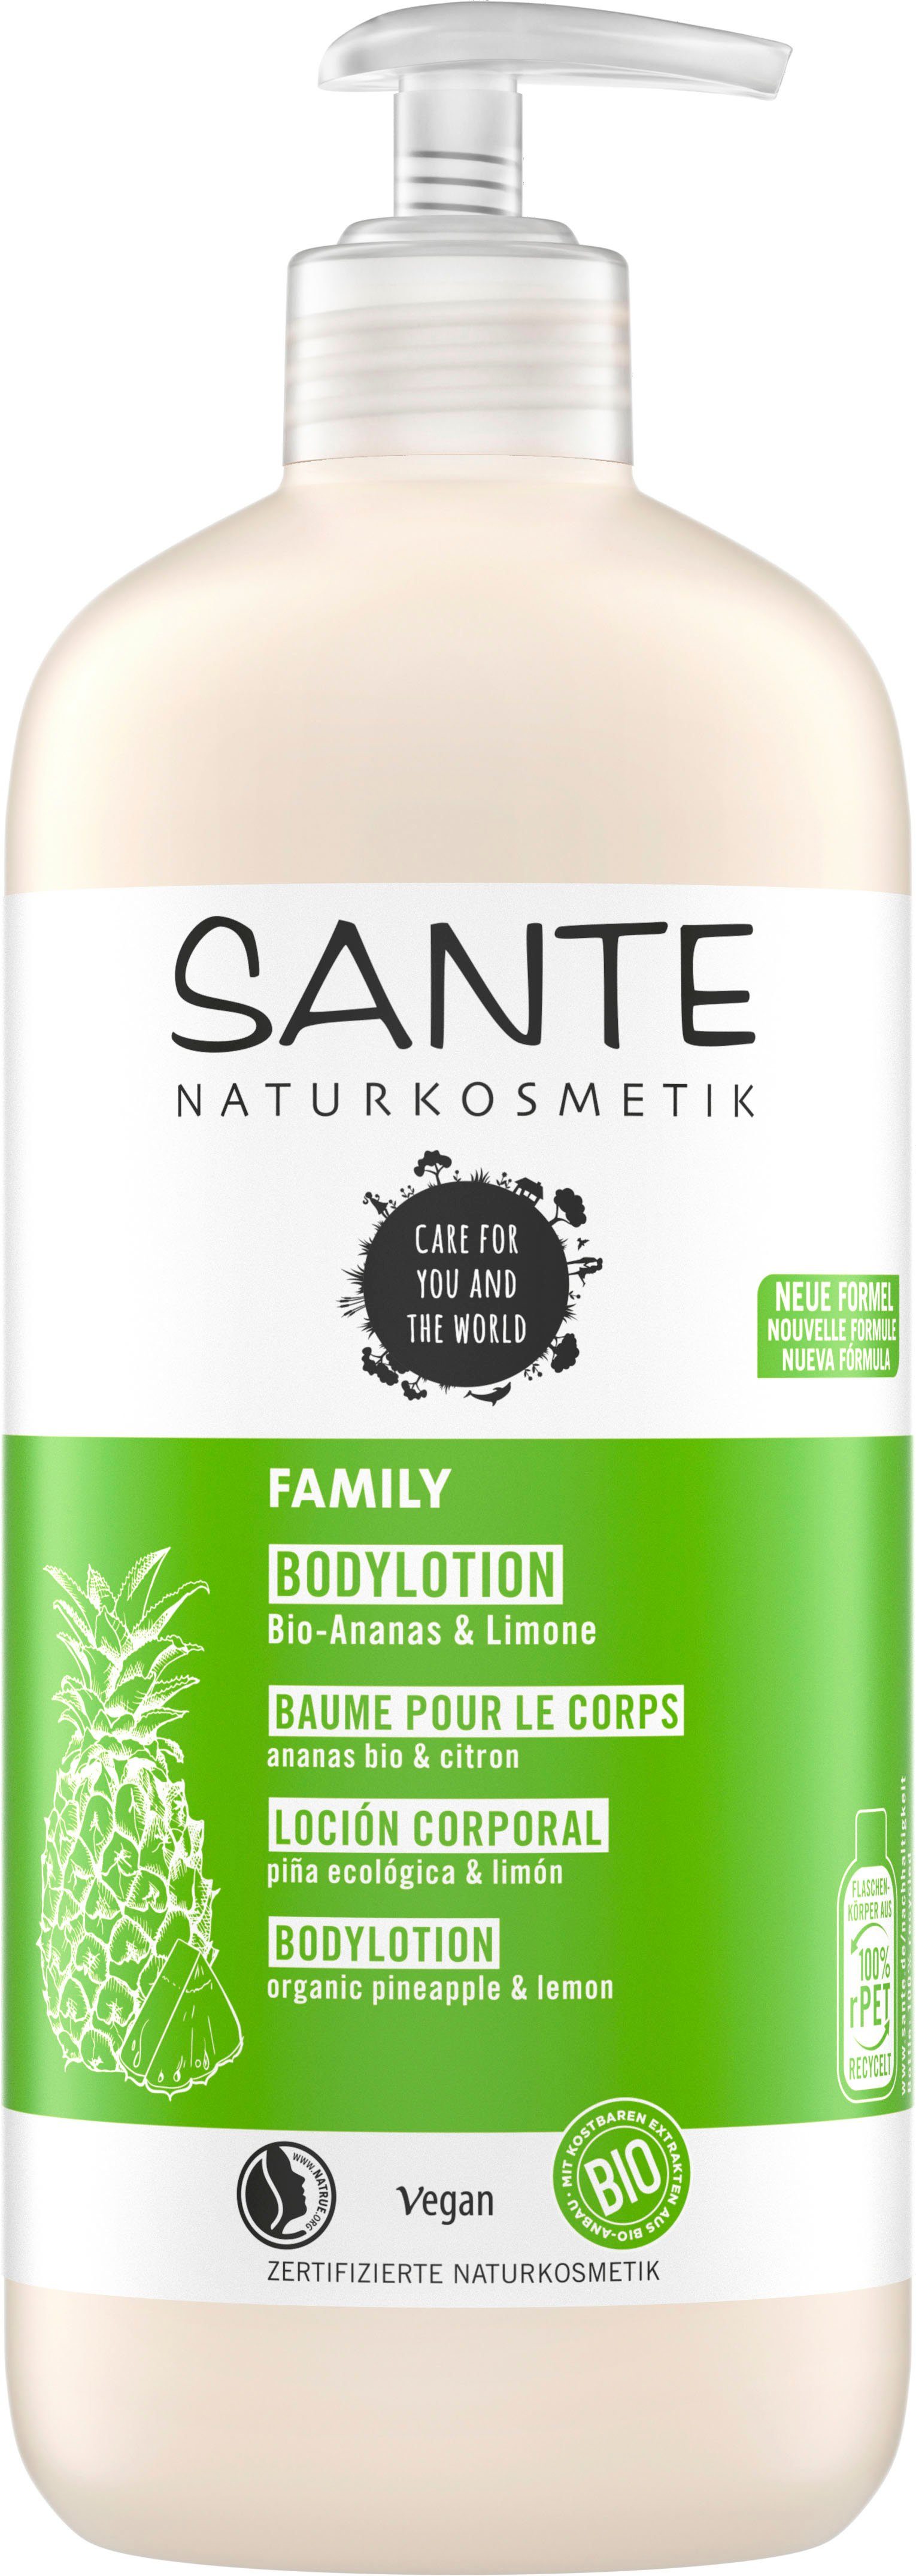 SANTE Family Bodylotion Sante Bodylotion